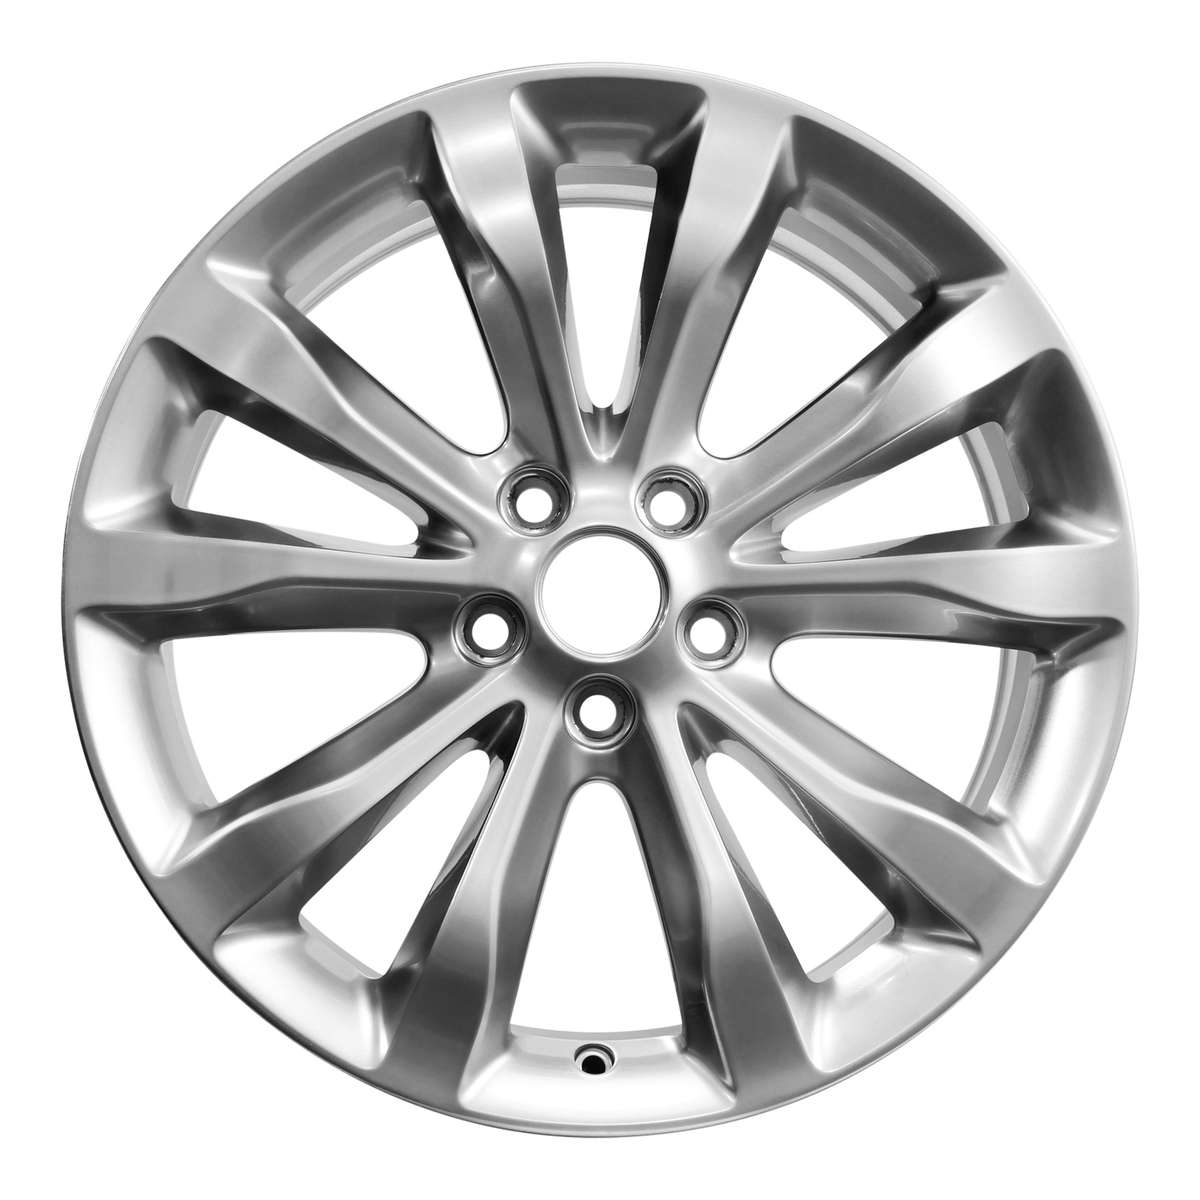 2019 Chrysler 300 19" OEM Wheel Rim W2538H